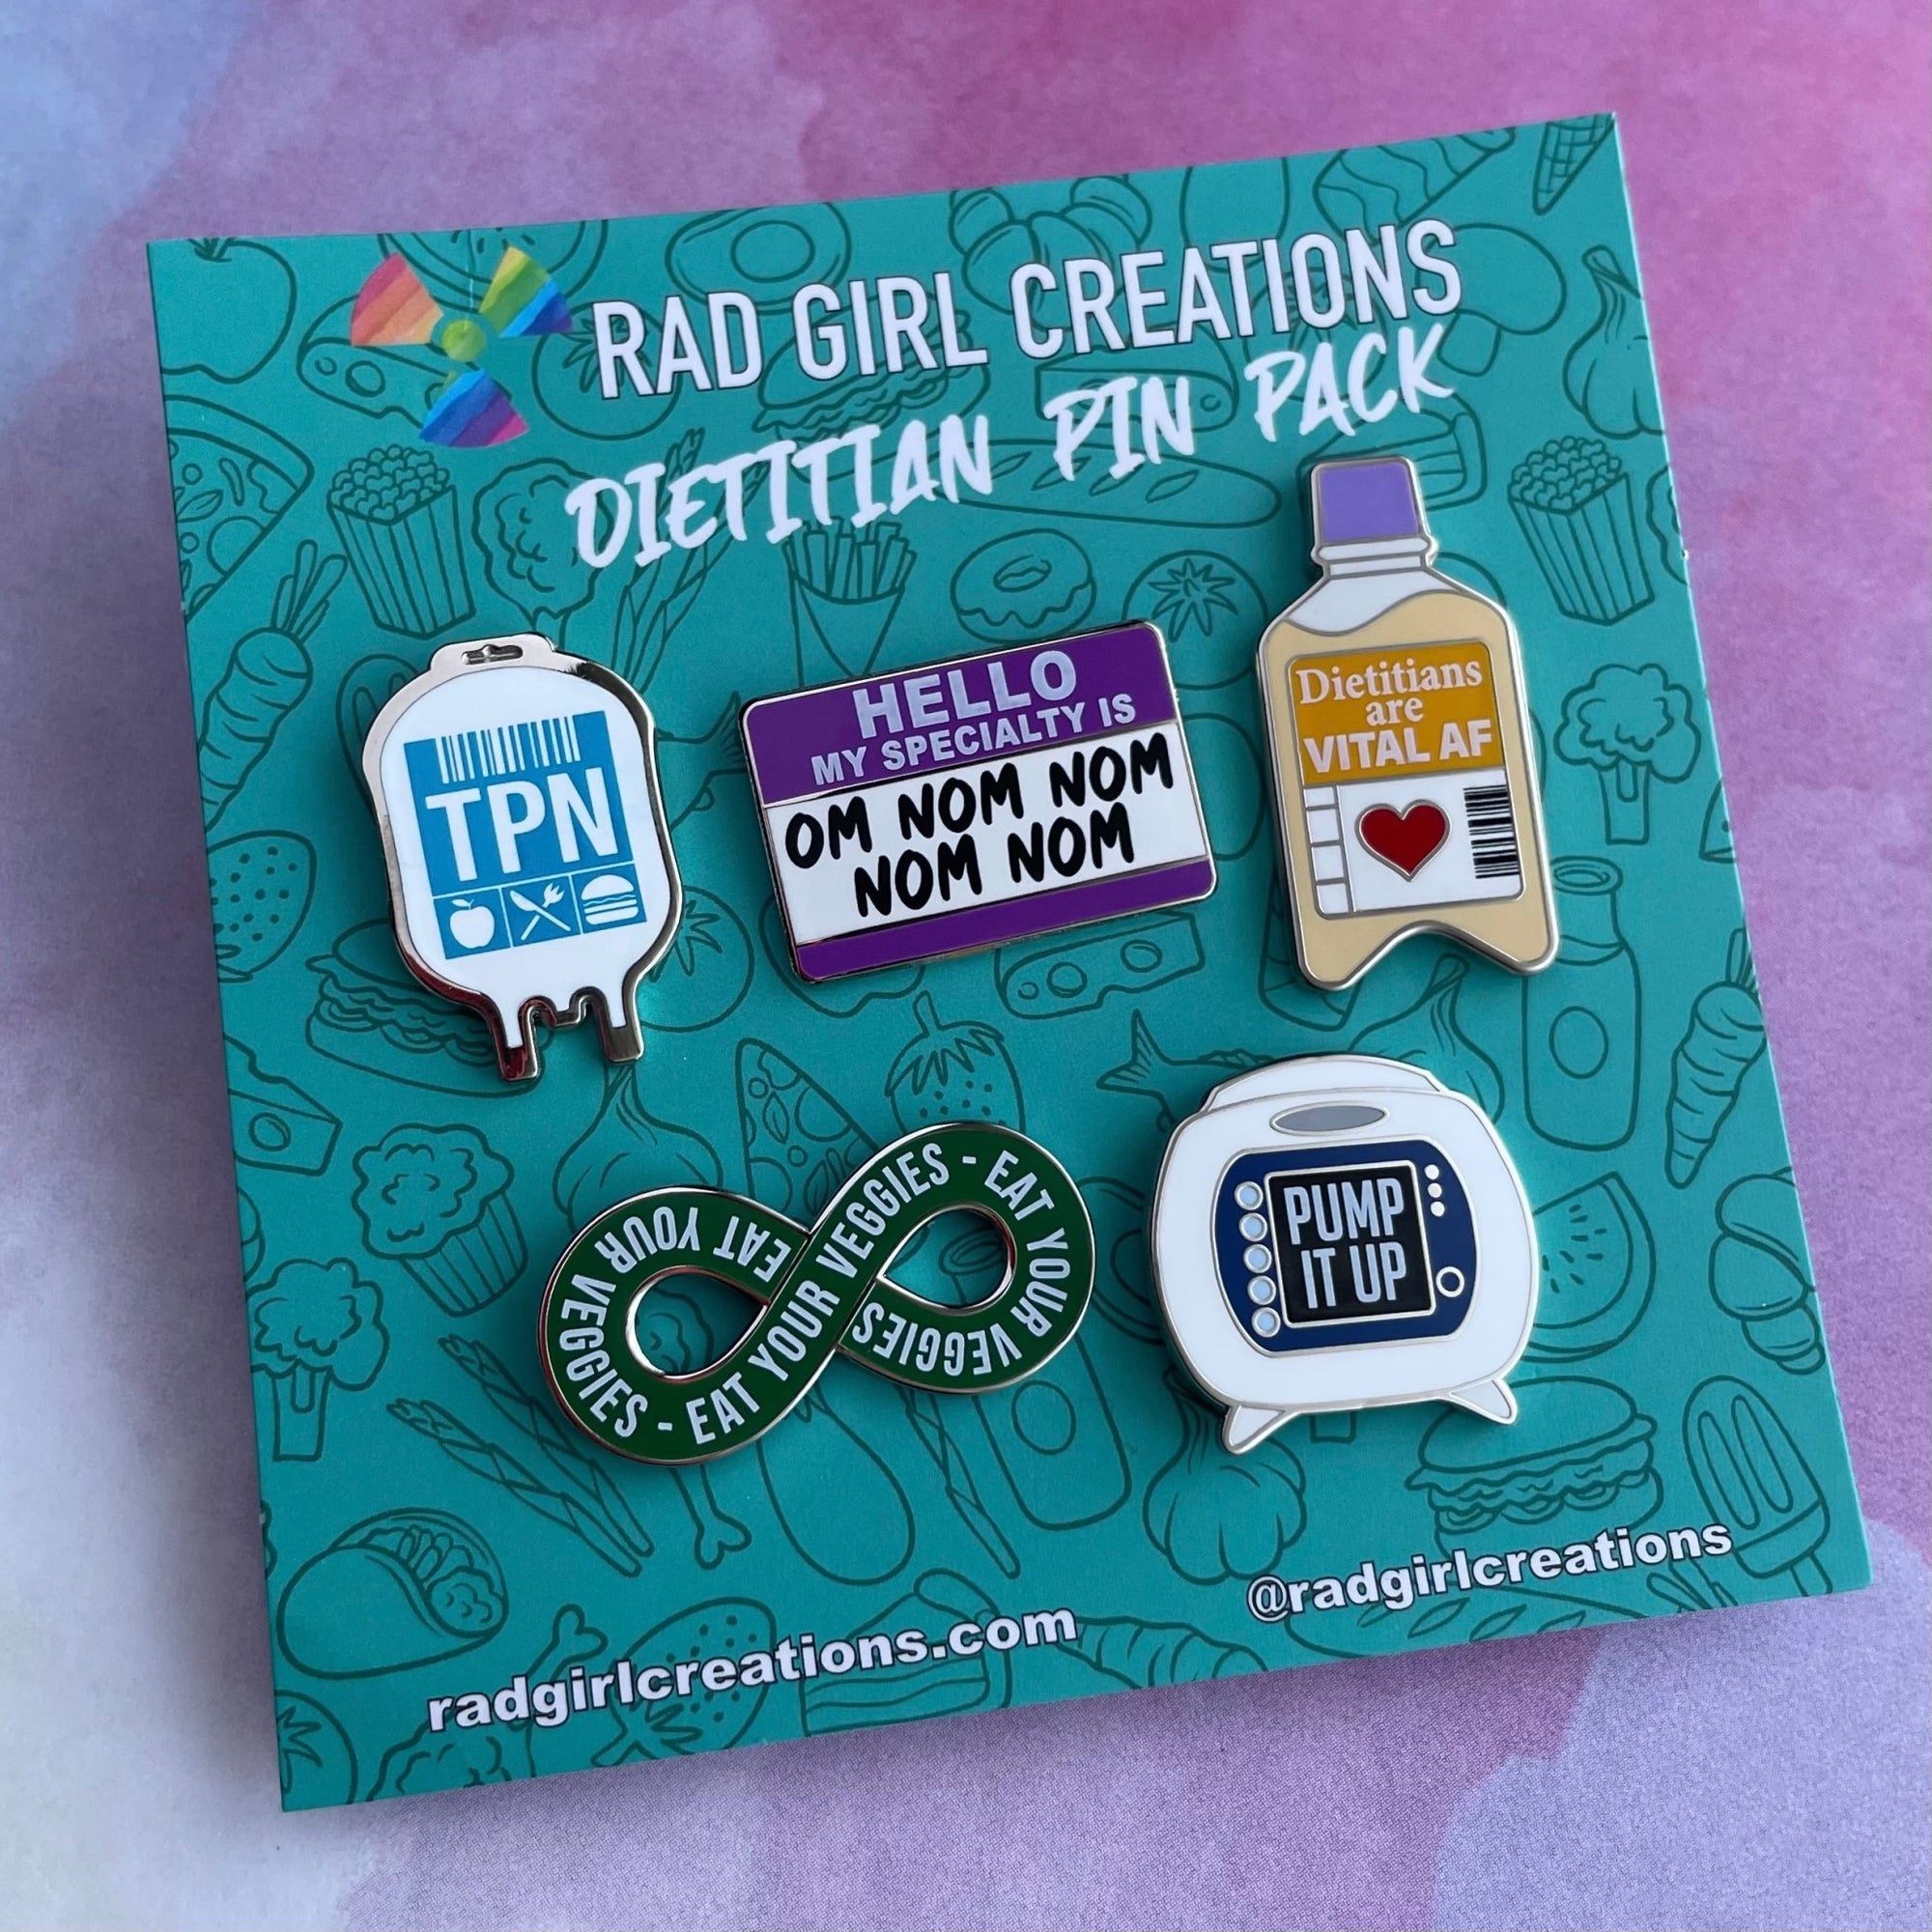 Dietitian Pin Pack - Rad Girl Creations